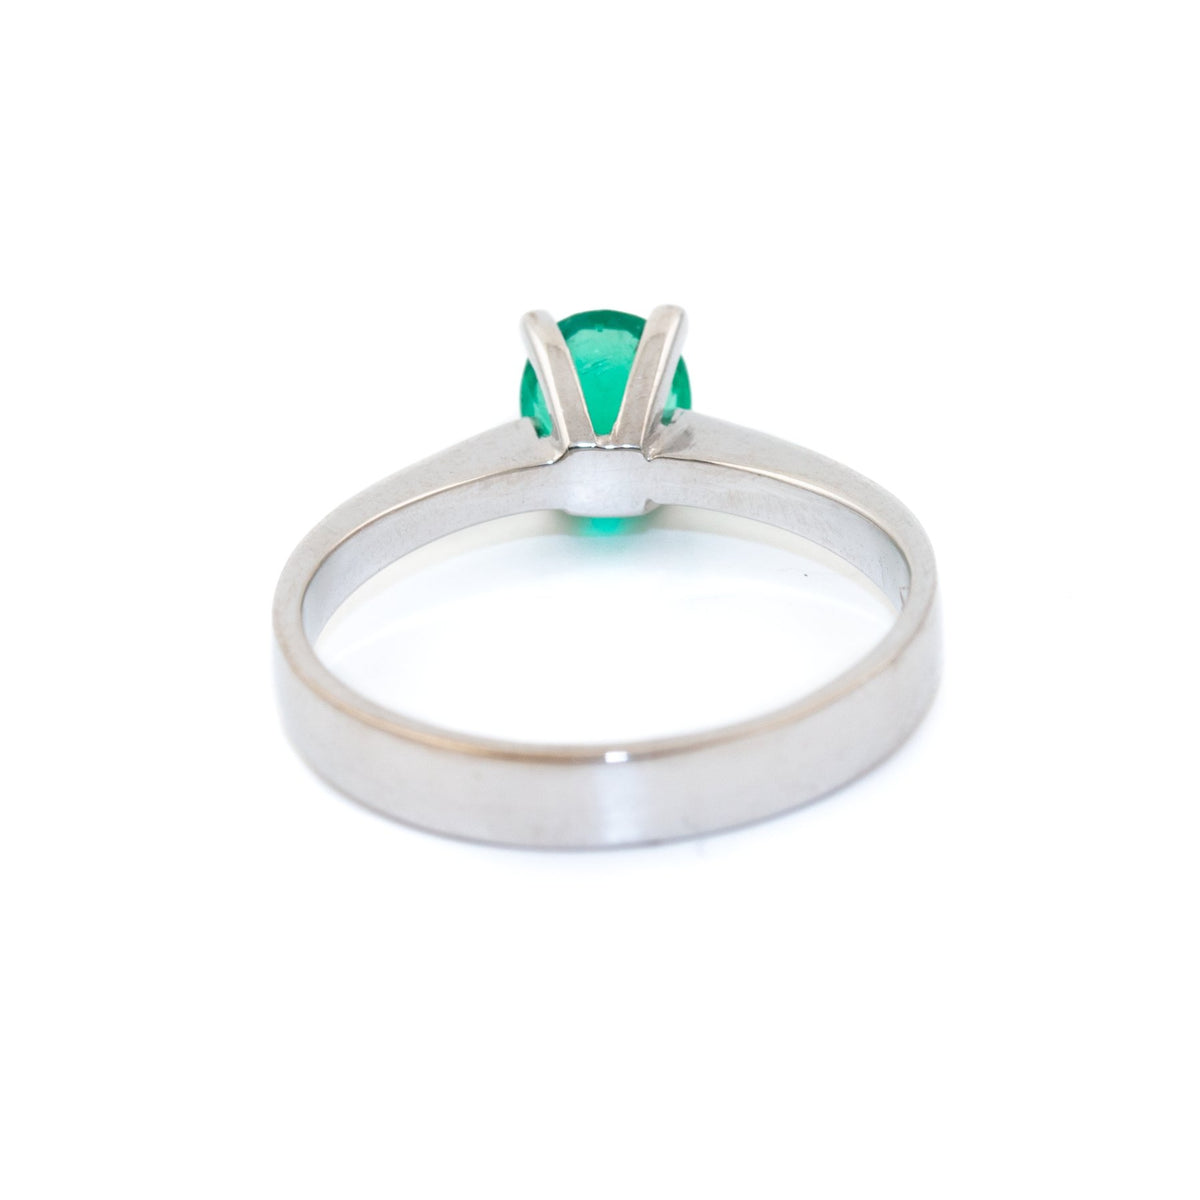 Vintage 18K Oval Cut Emerald Ring - Kingdom Jewelry